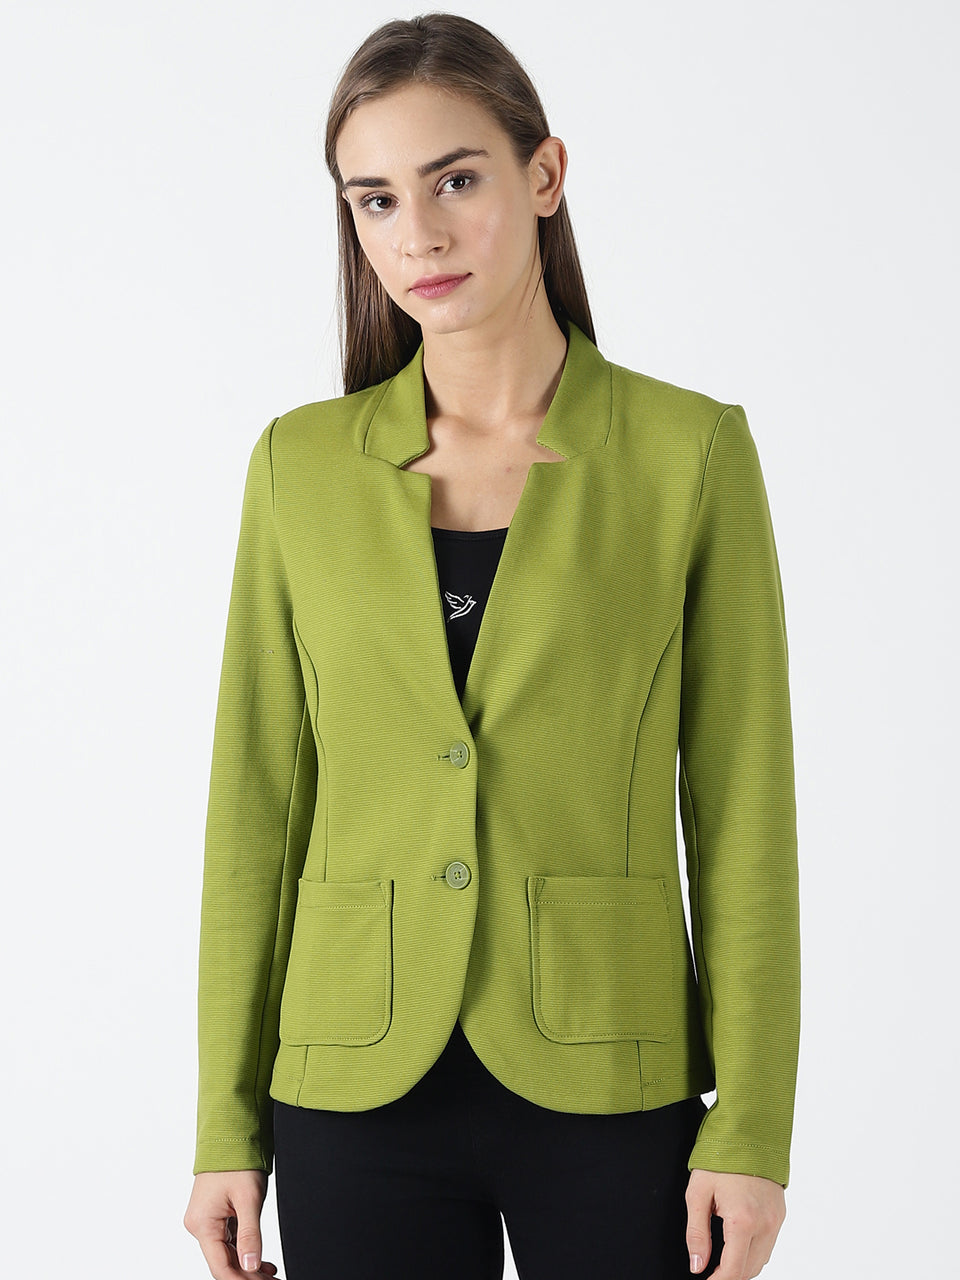 Jacket Lace Ladies Woman | Women Lace Hollow Jacket | Womens Jacket Lace  Print - Jackets - Aliexpress